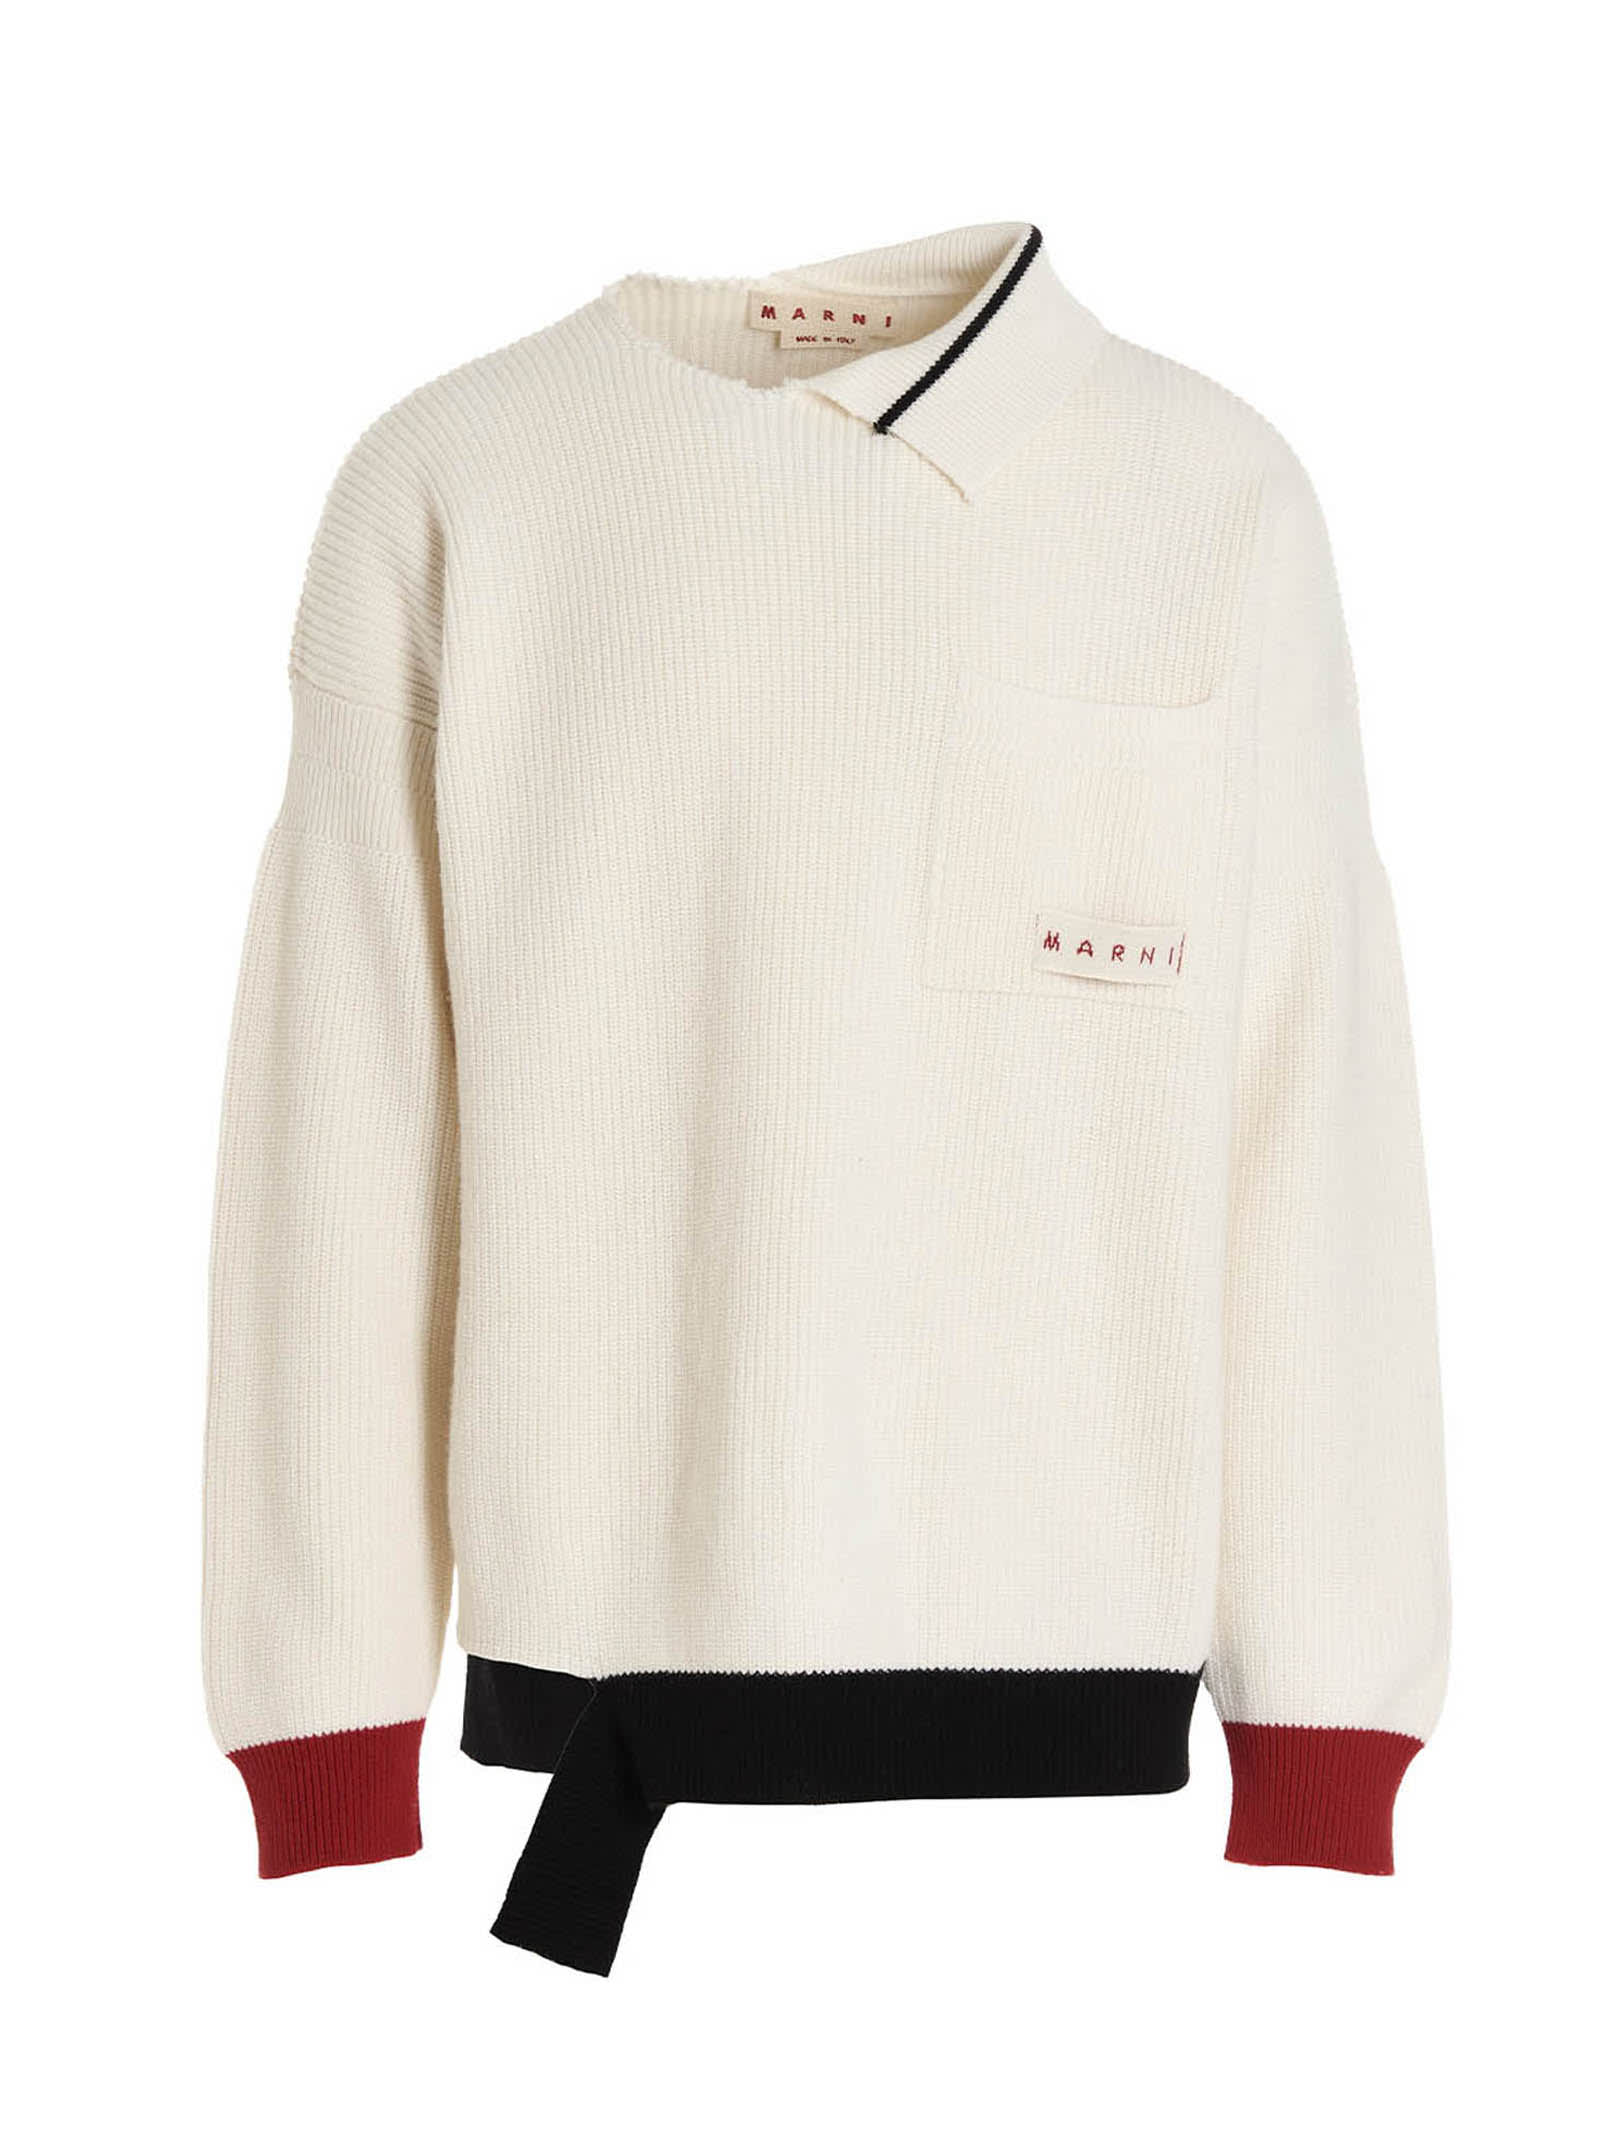 Marni Cut Detail Sweater